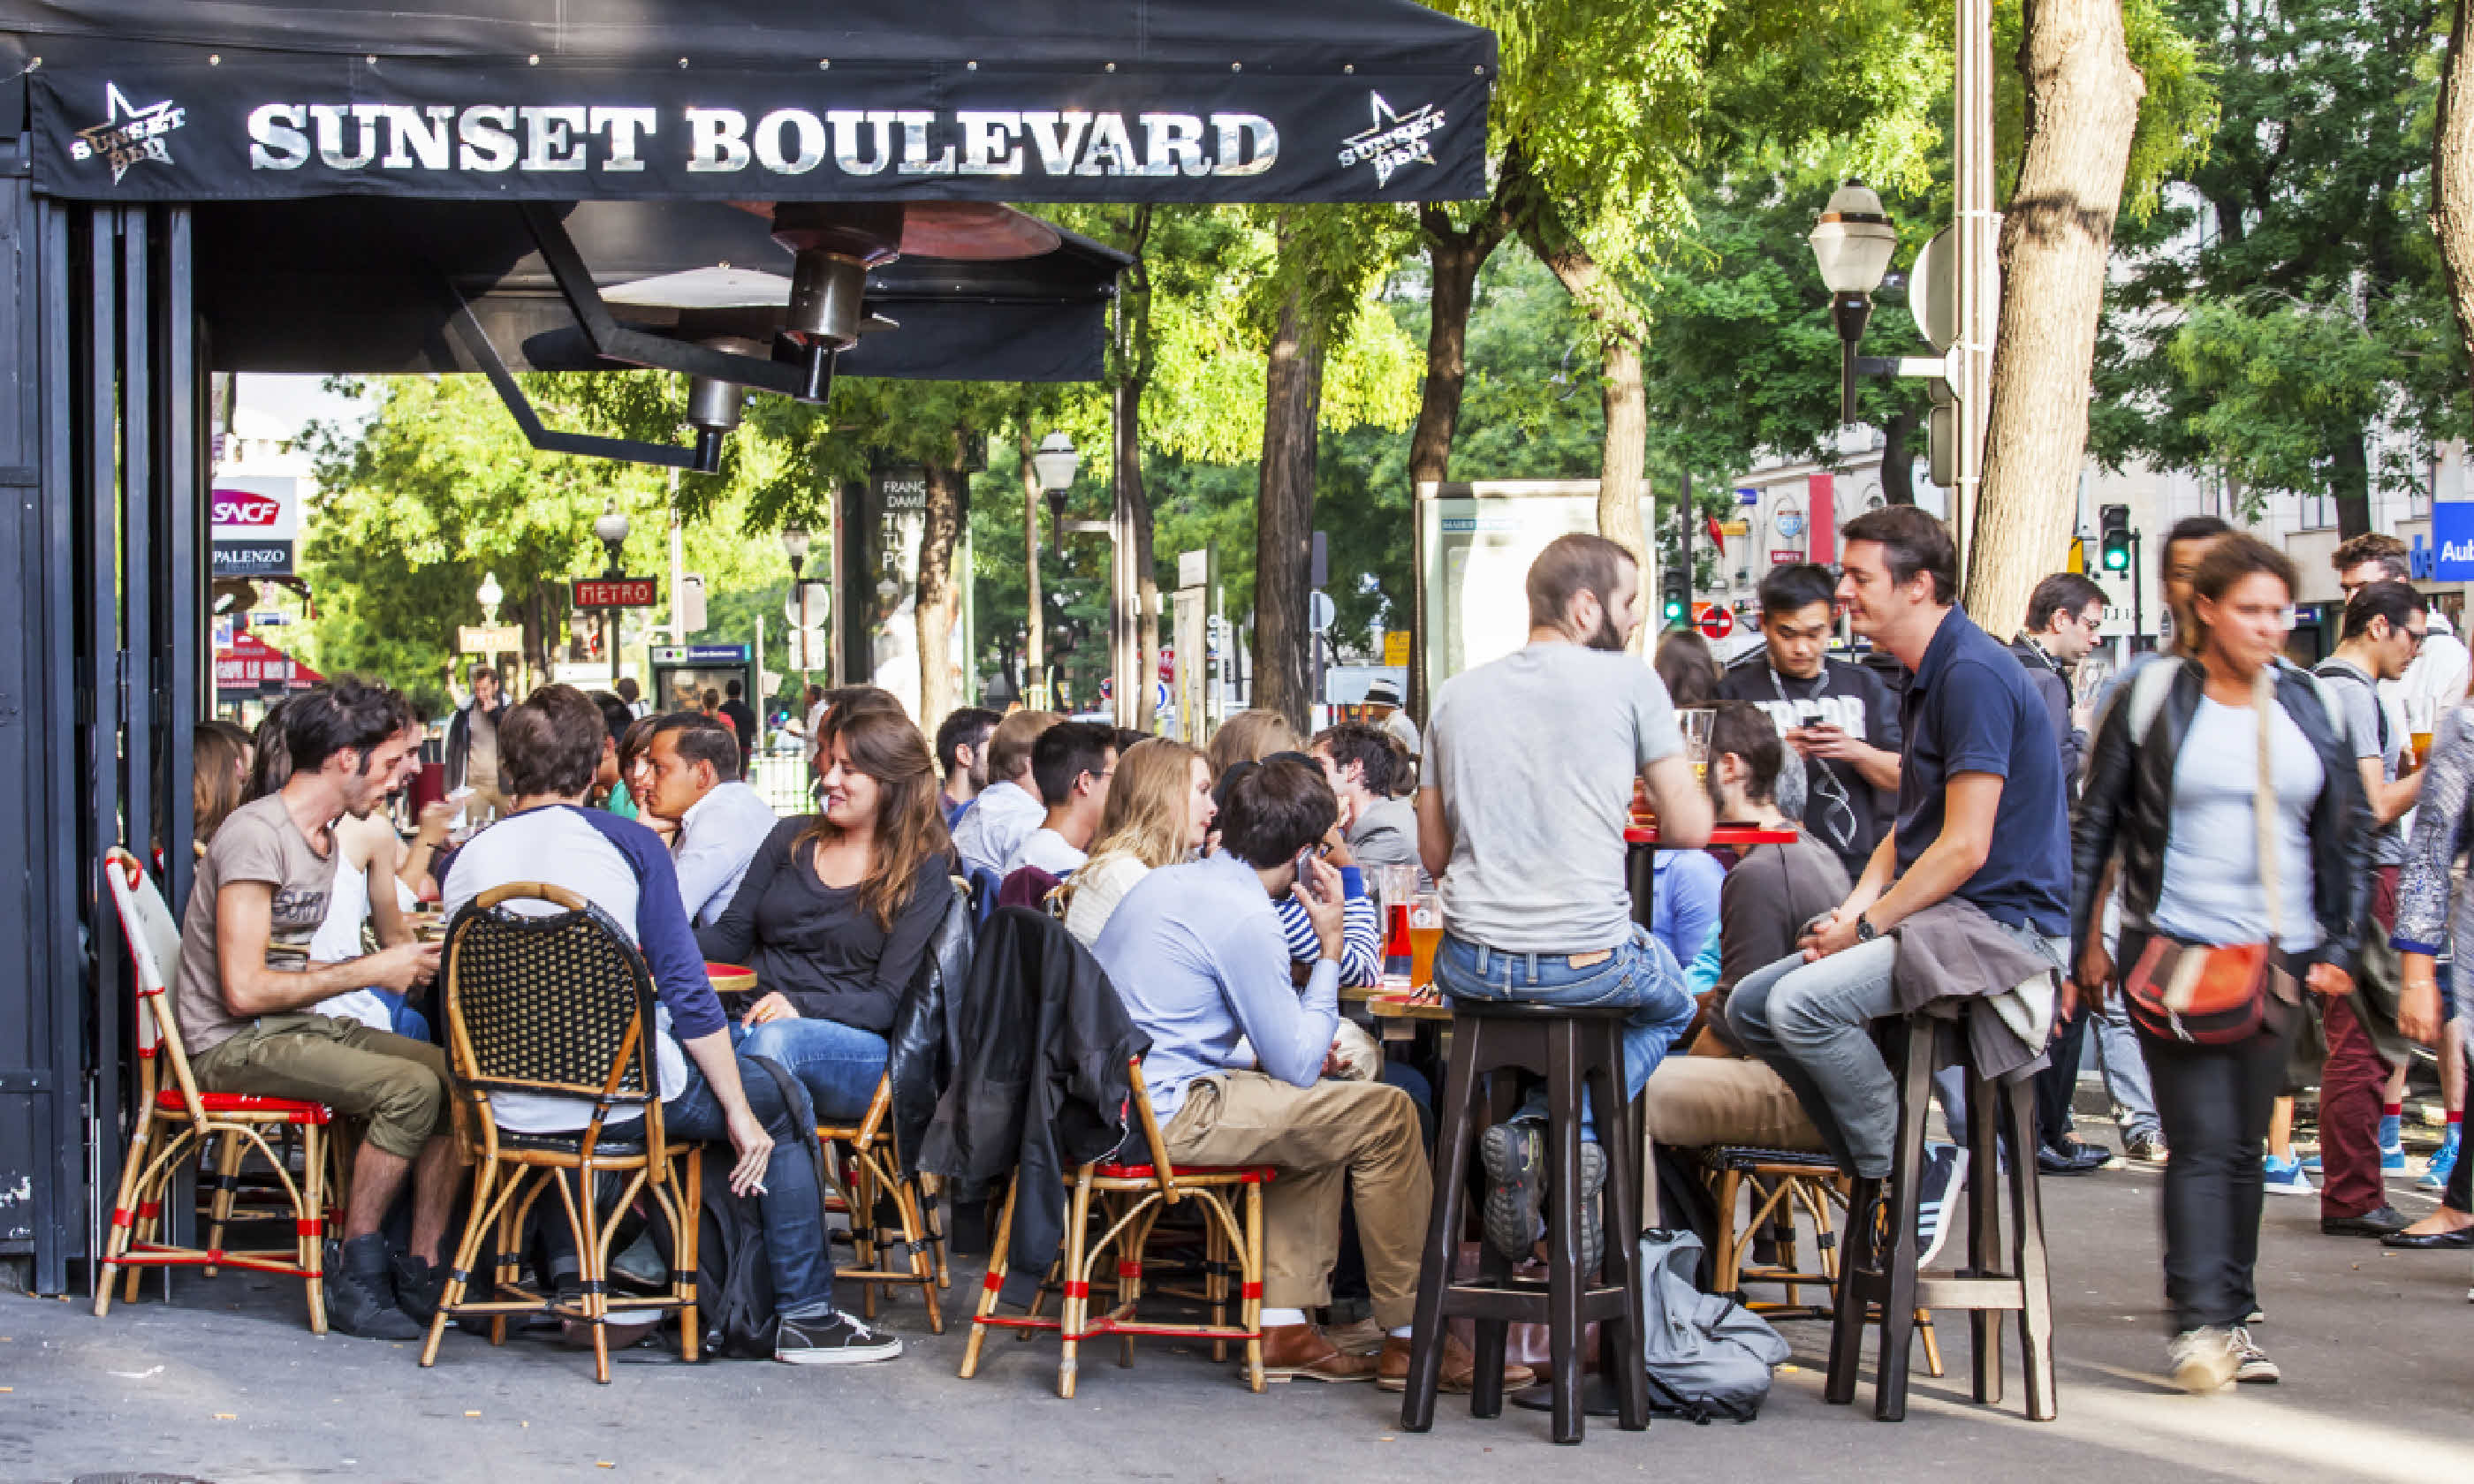 Paris cafe (Shutterstock)